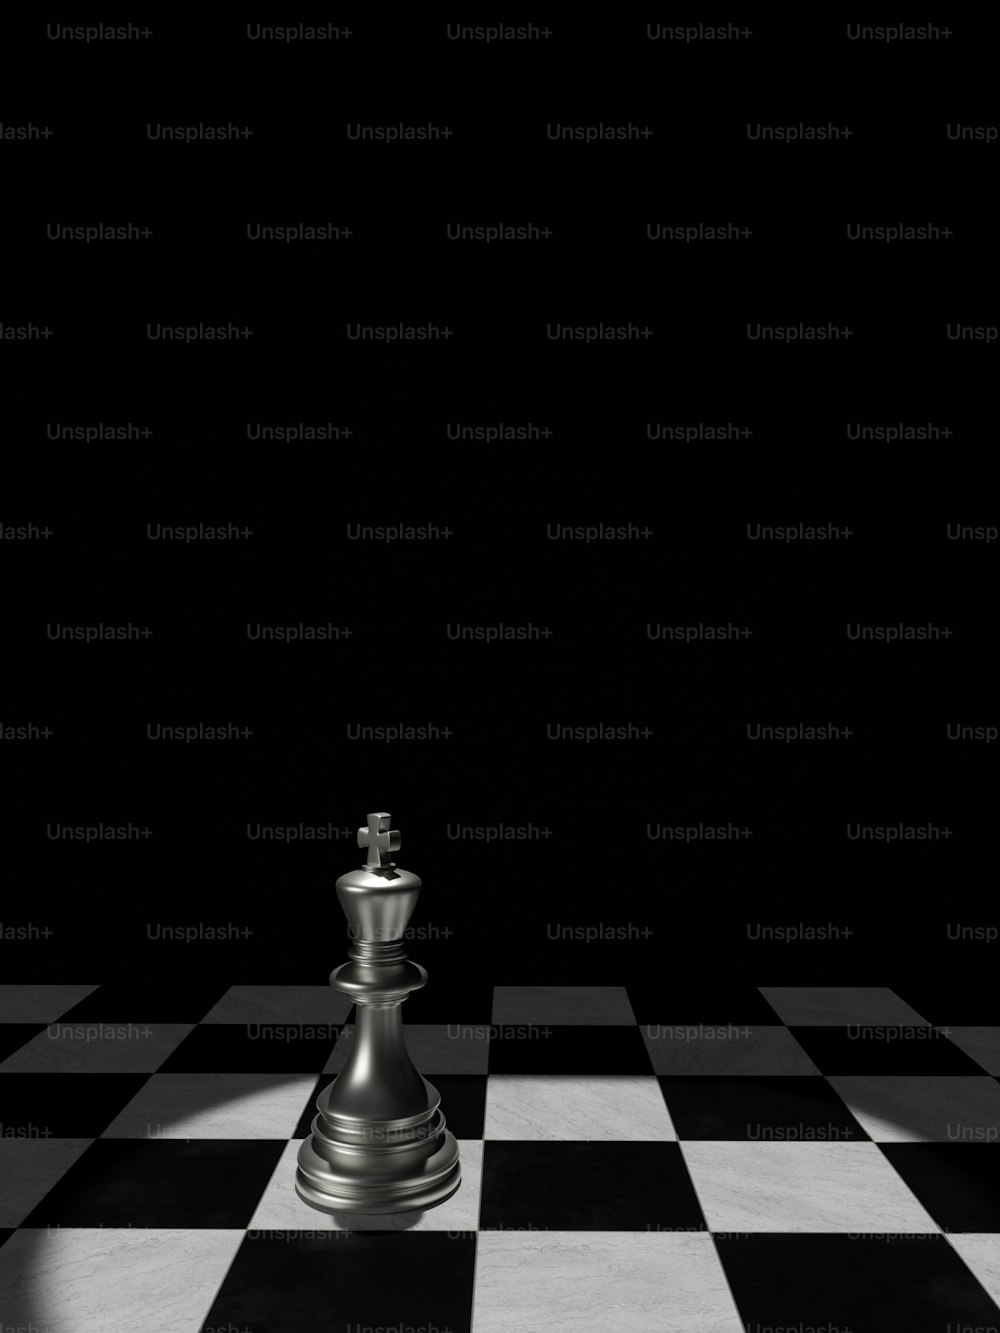 chess board background design - Shamudy